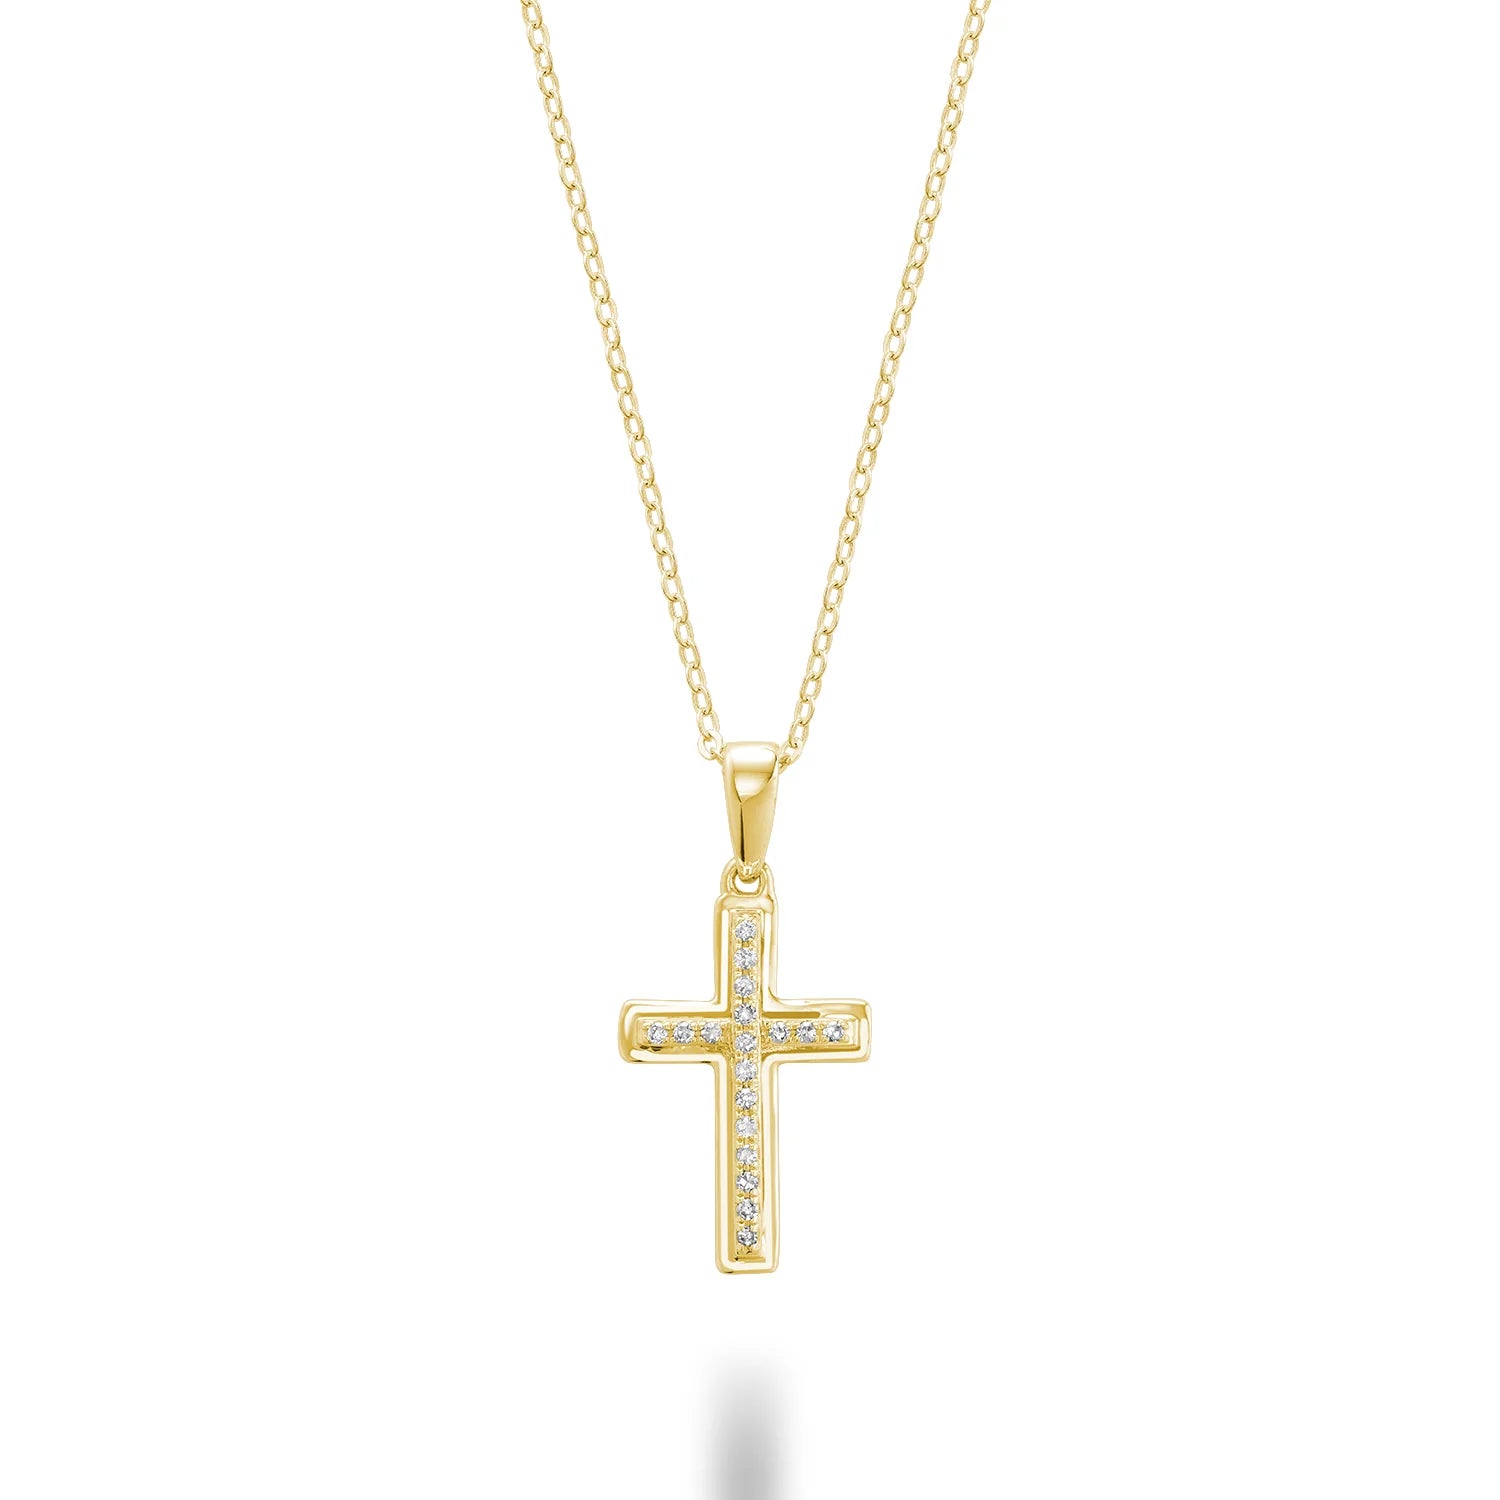 The Cross Diamond Necklace